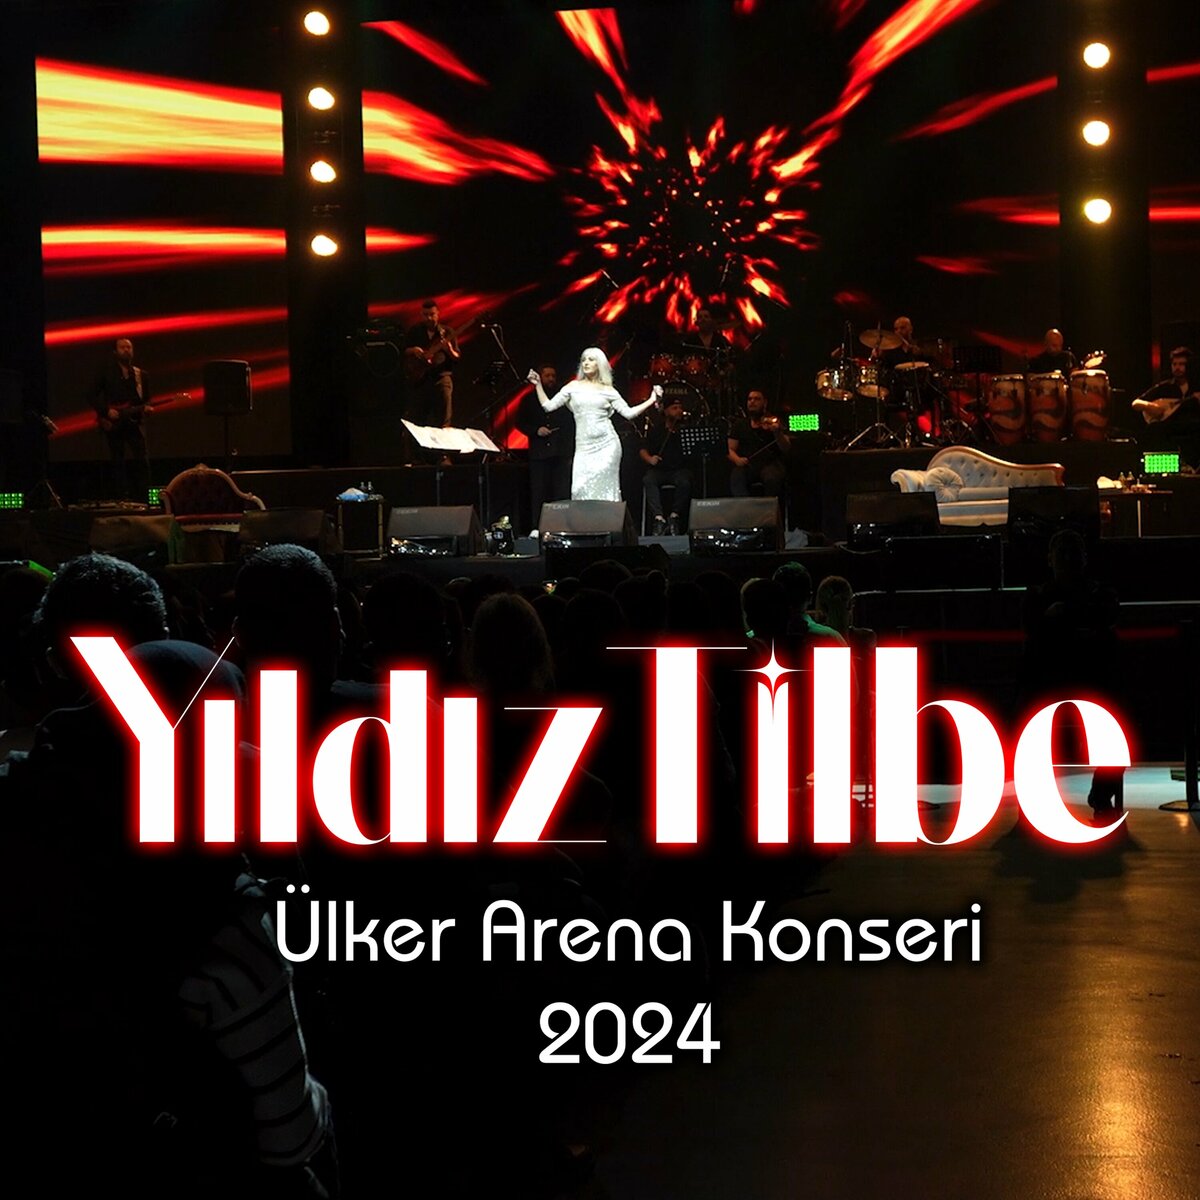 Yildiz Tilbe – Ulker Arena Konseri